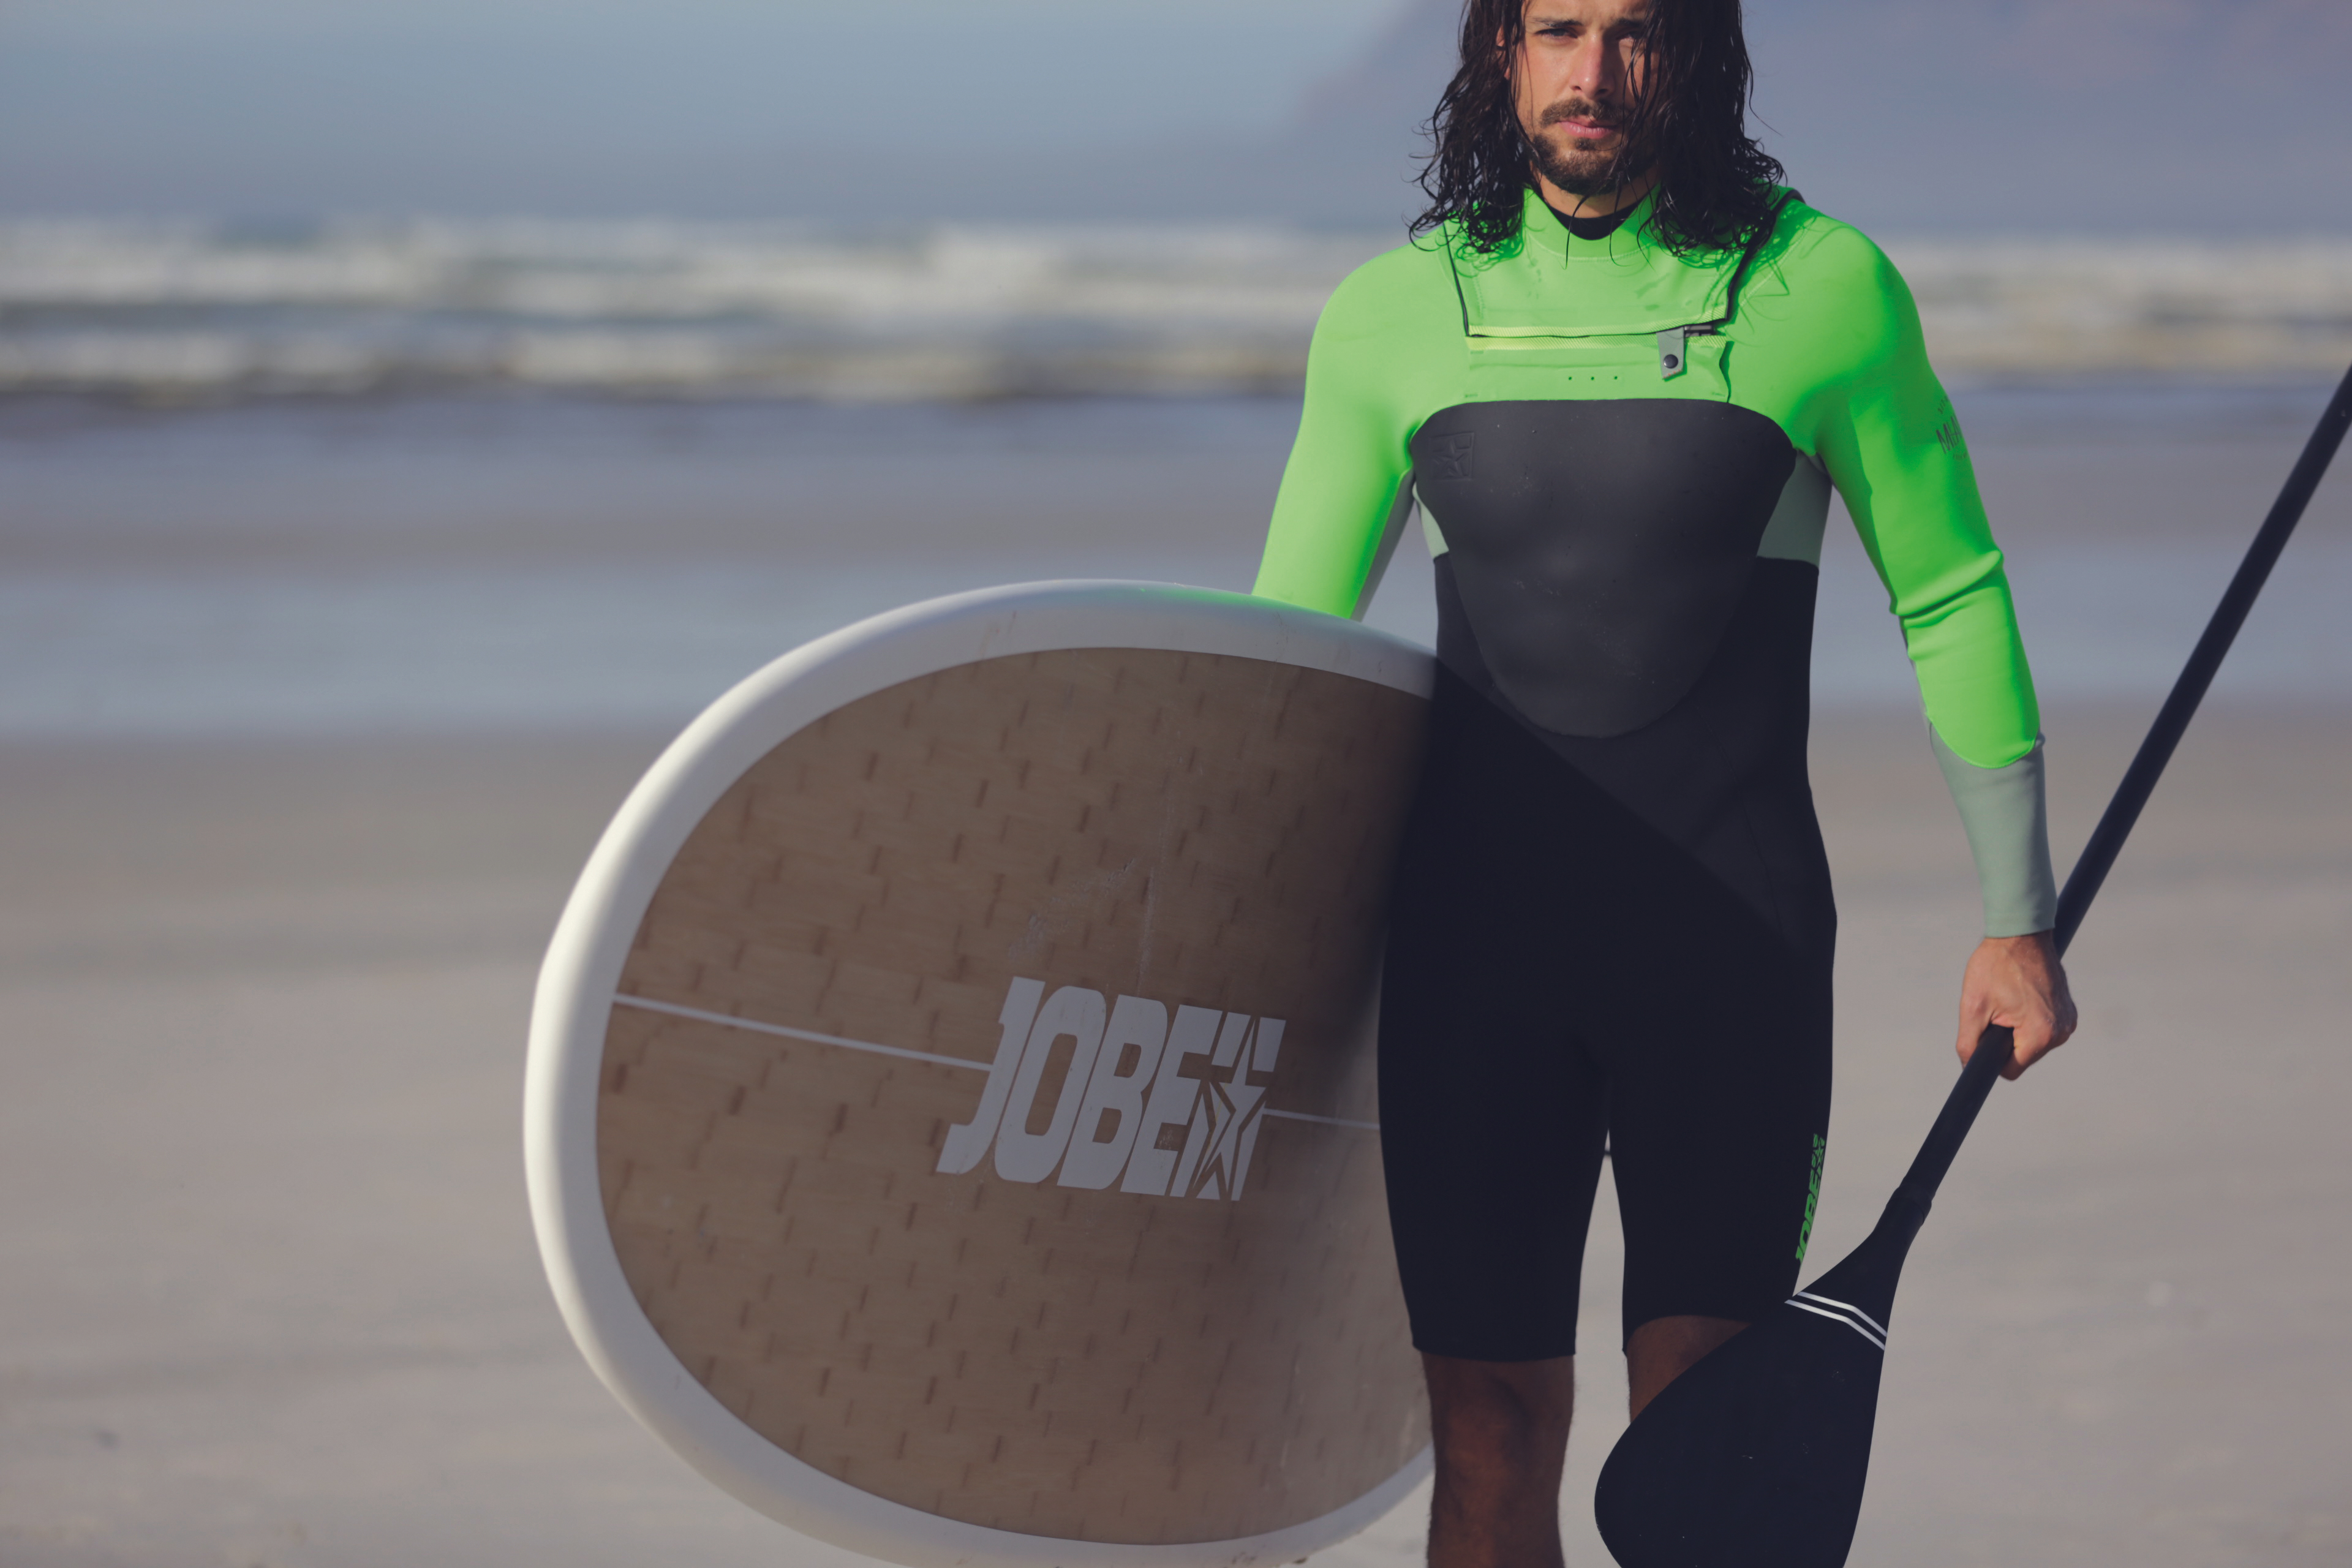 The new 2016 Jobe wetsuit range is here!